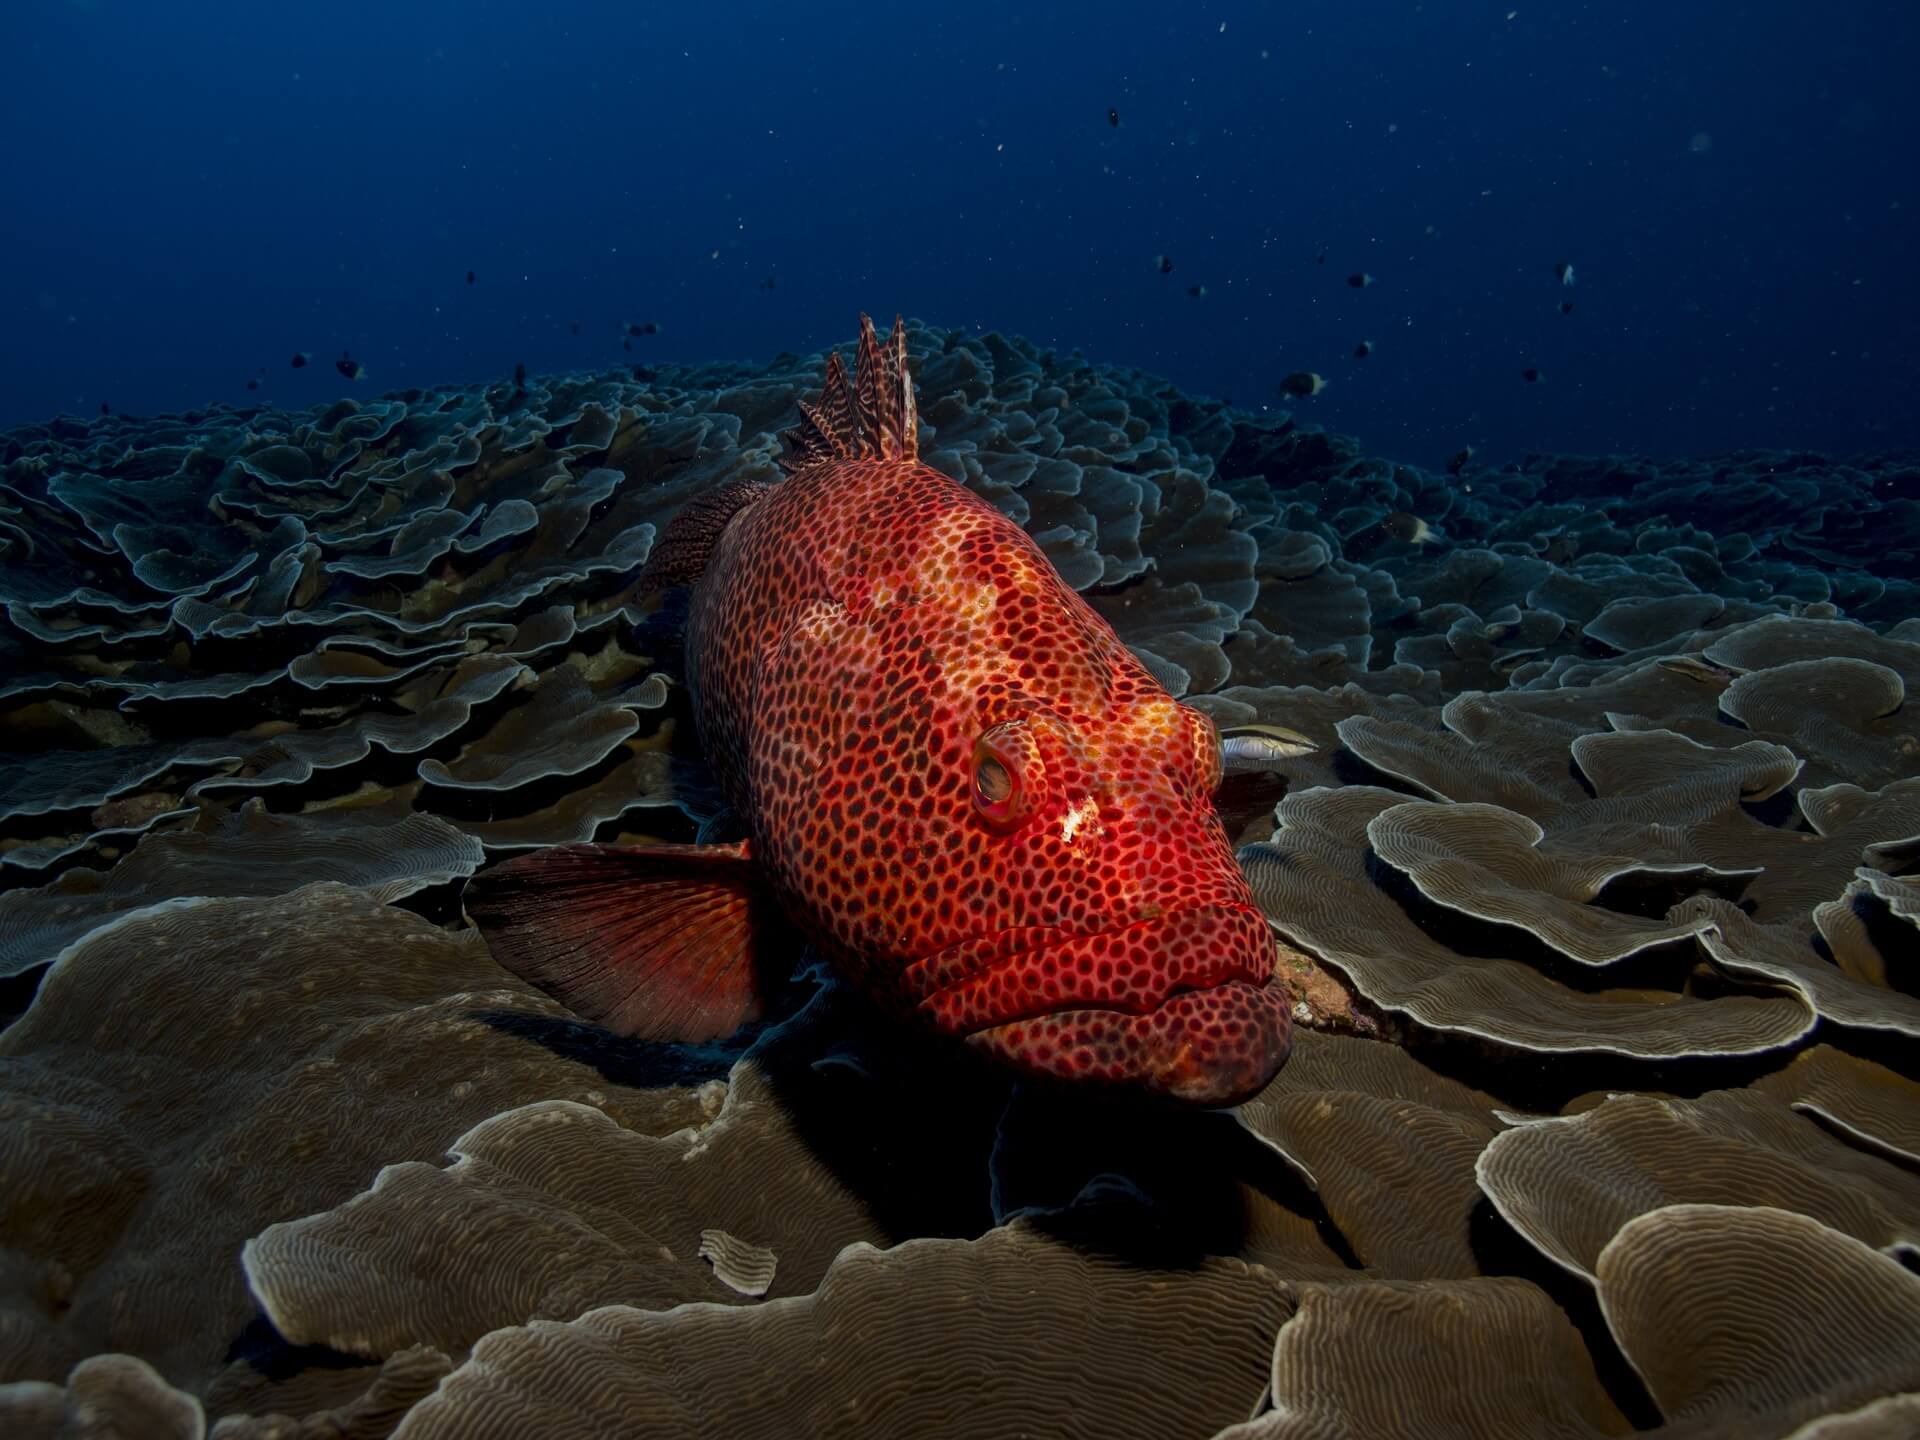 https://pixabay.com/en/fish-grouper-red-sea-water-animal-1118892/